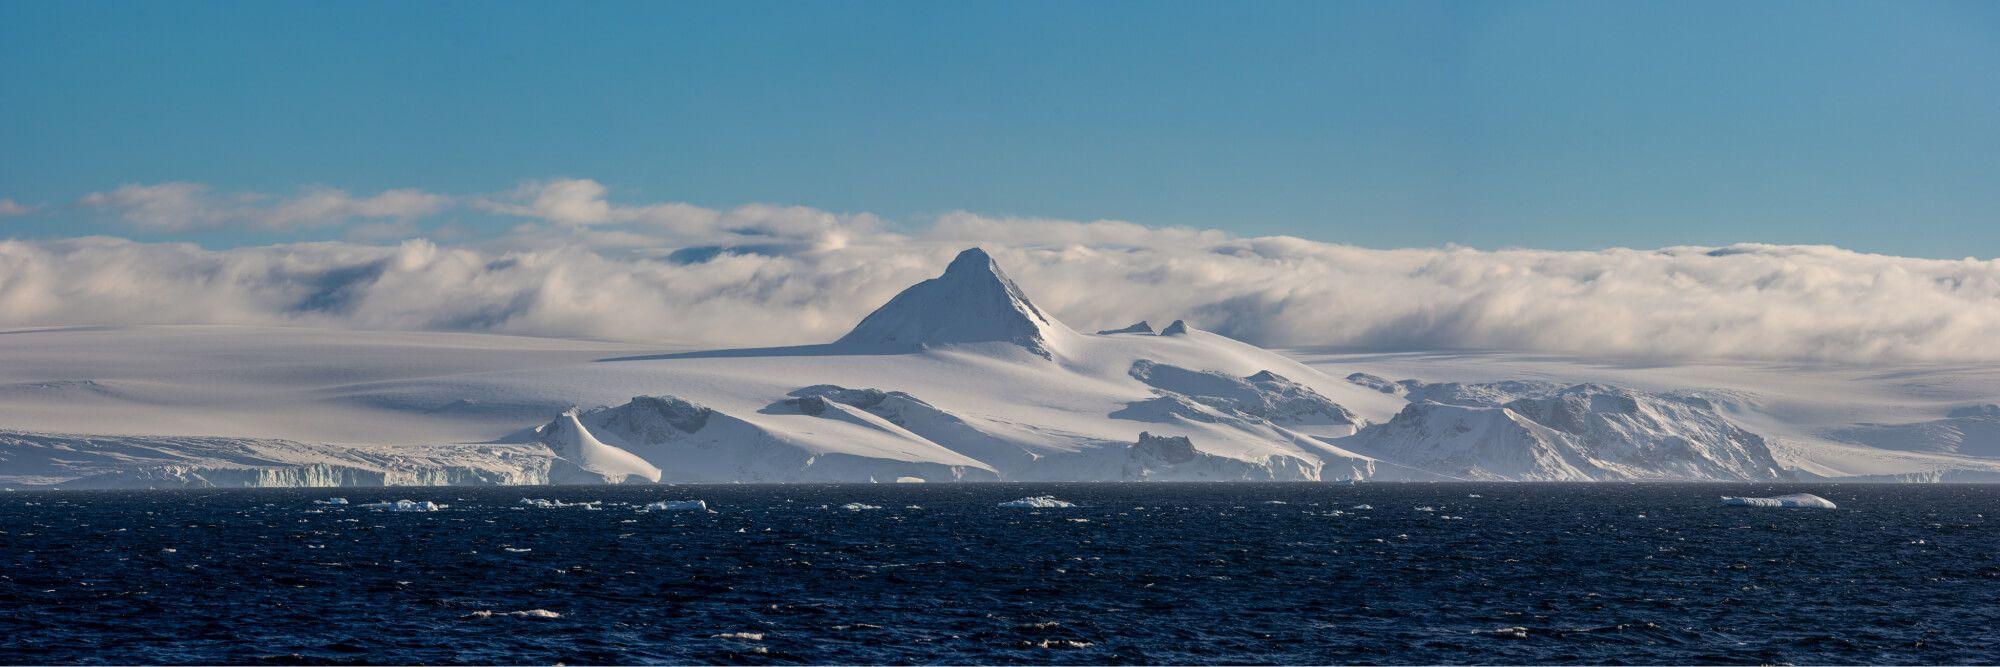 The white continent, Antarctica.   Photographer: Artem Shestakov. Location: Antarctica.